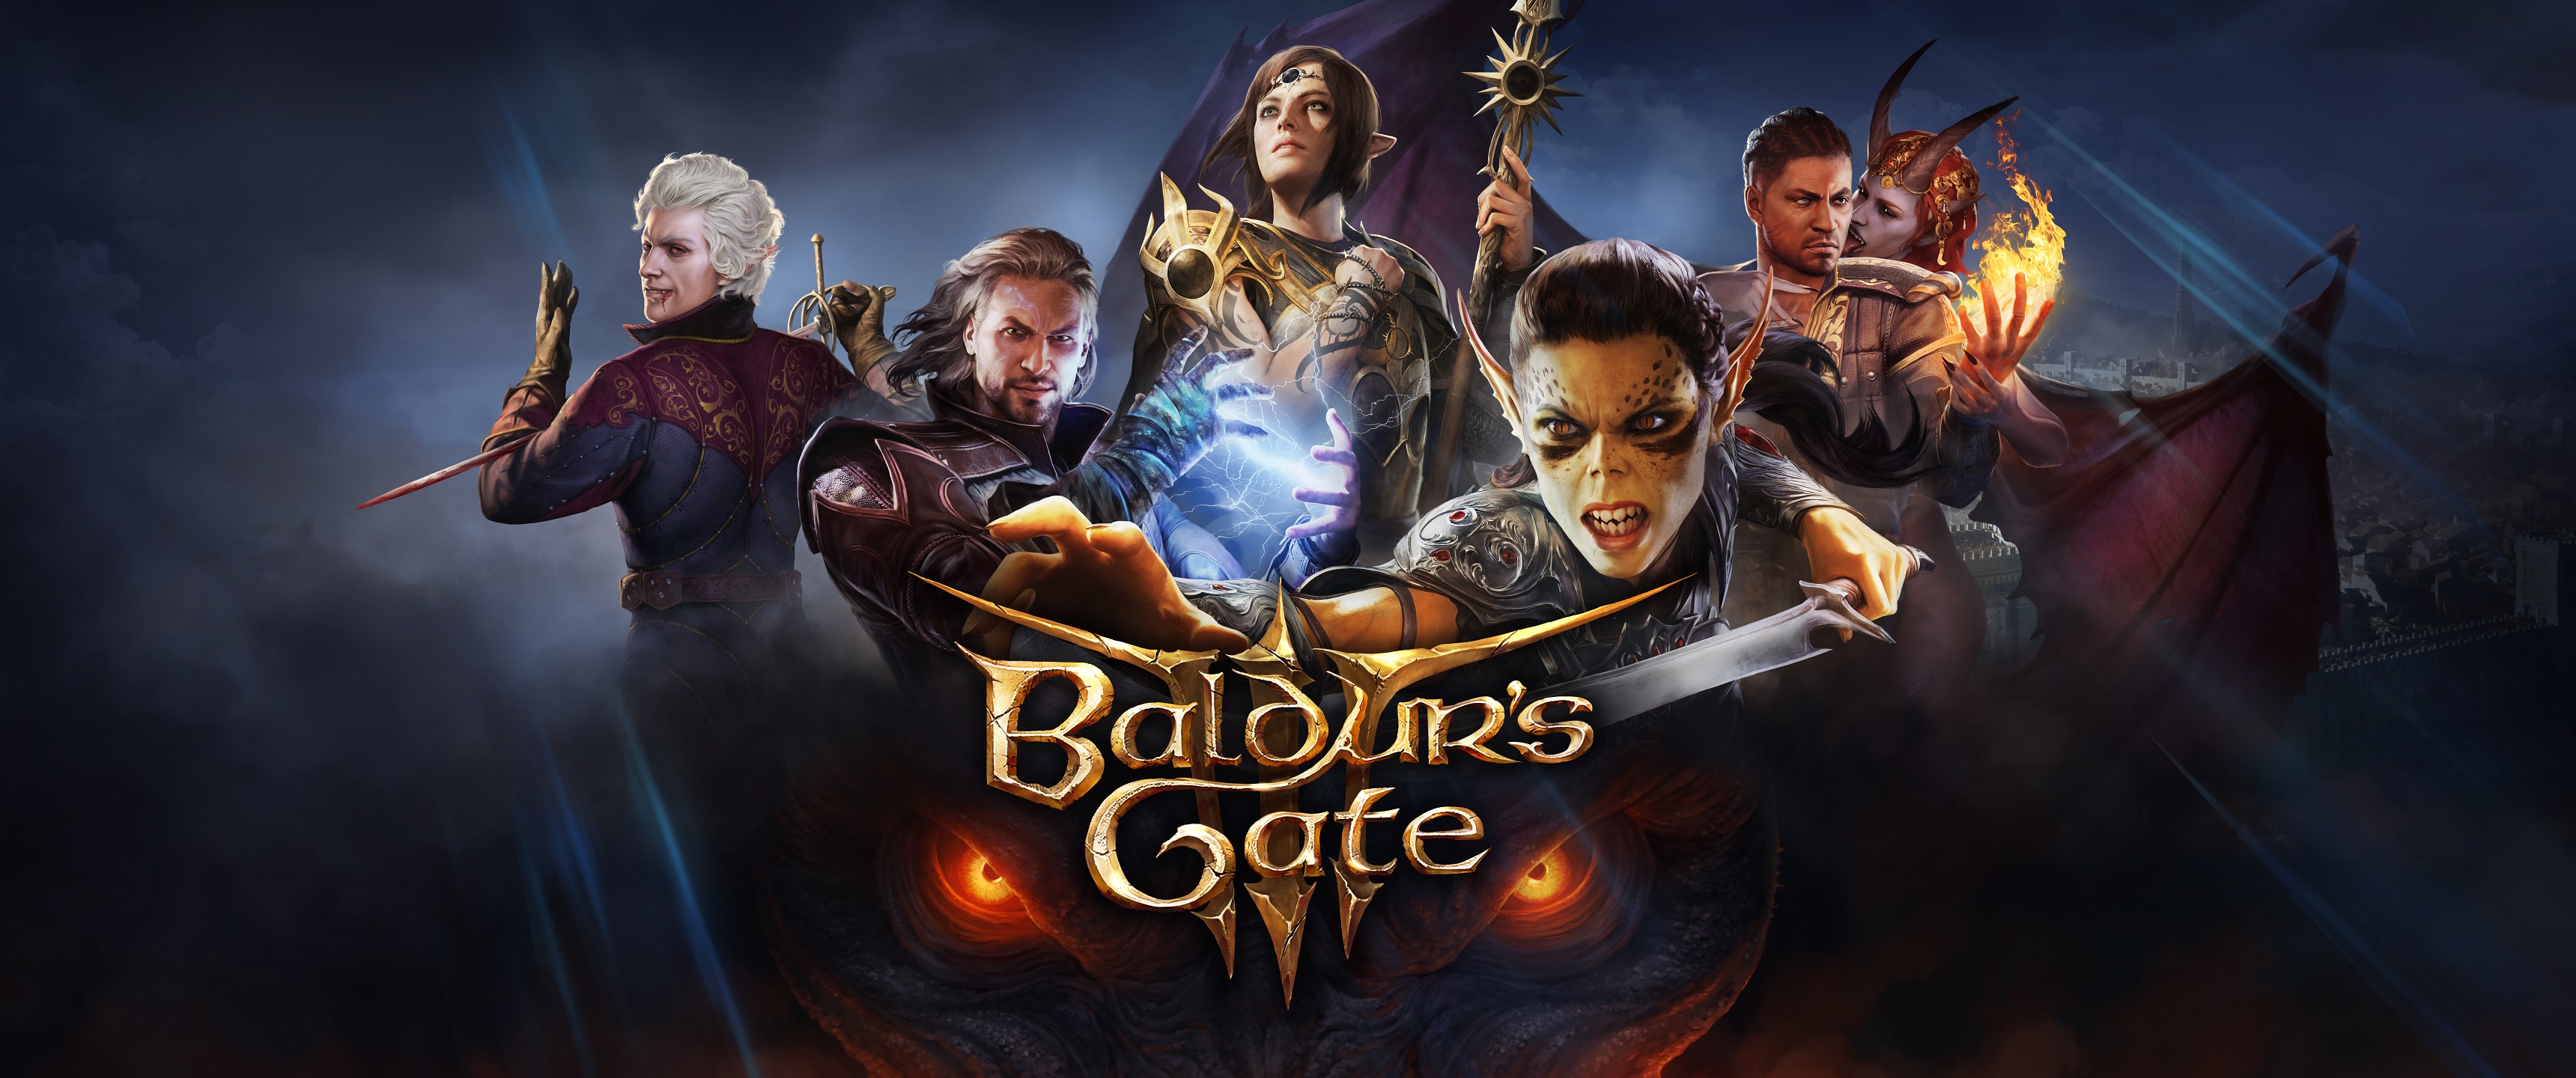 General 3440x1440 Baldur's Gate 3 Larian studios Wizards of the Coast PC gaming fantasy art video game art Baldur's Gate Lae'zel Shadowheart (Baldur's Gate) Astarion